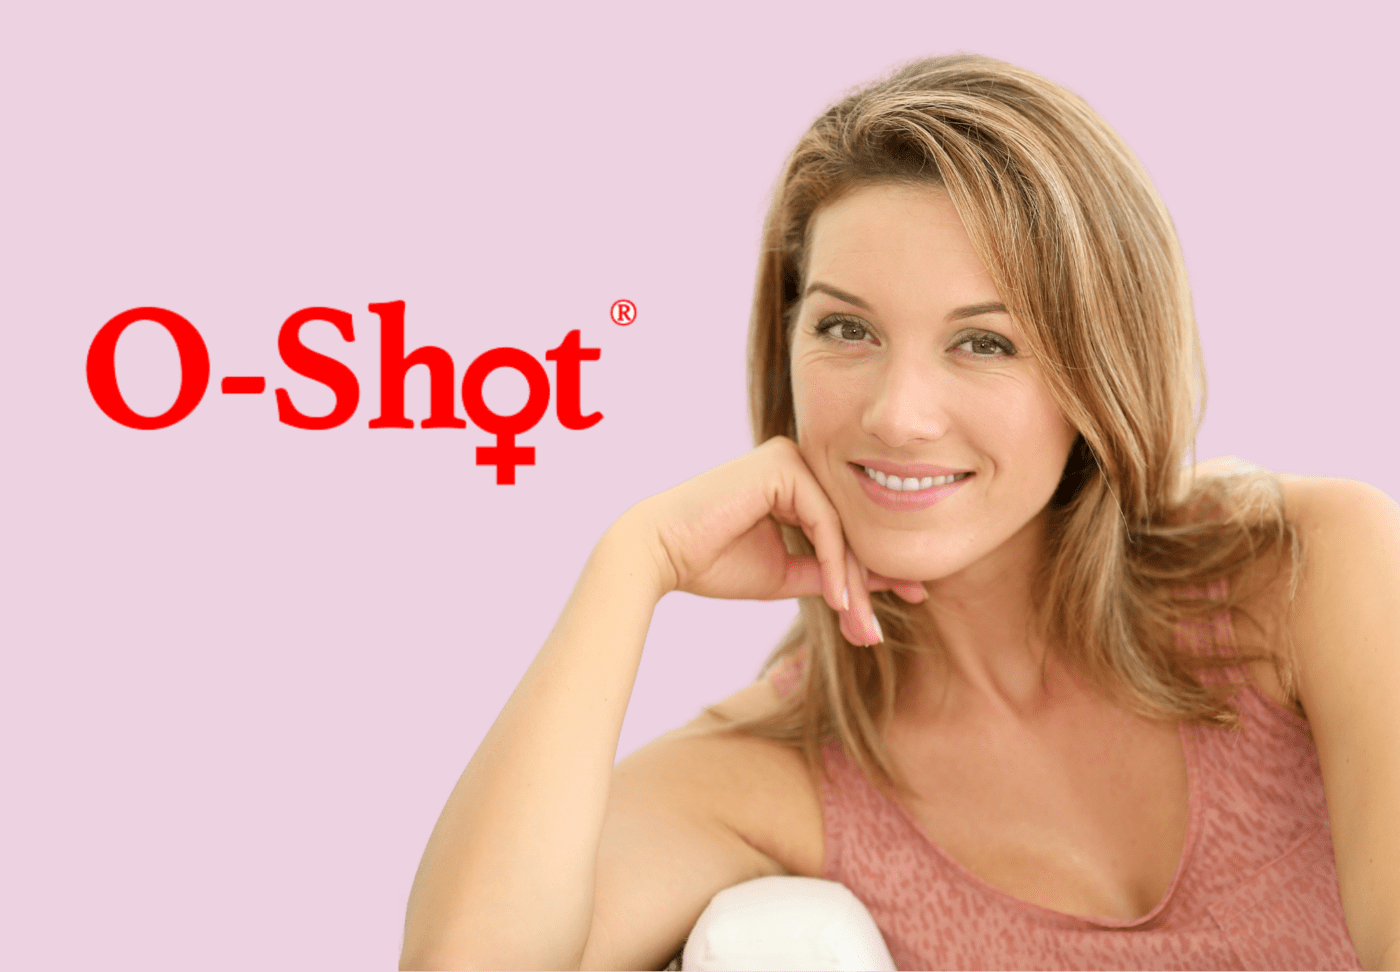 O-Shot logo with model woman.